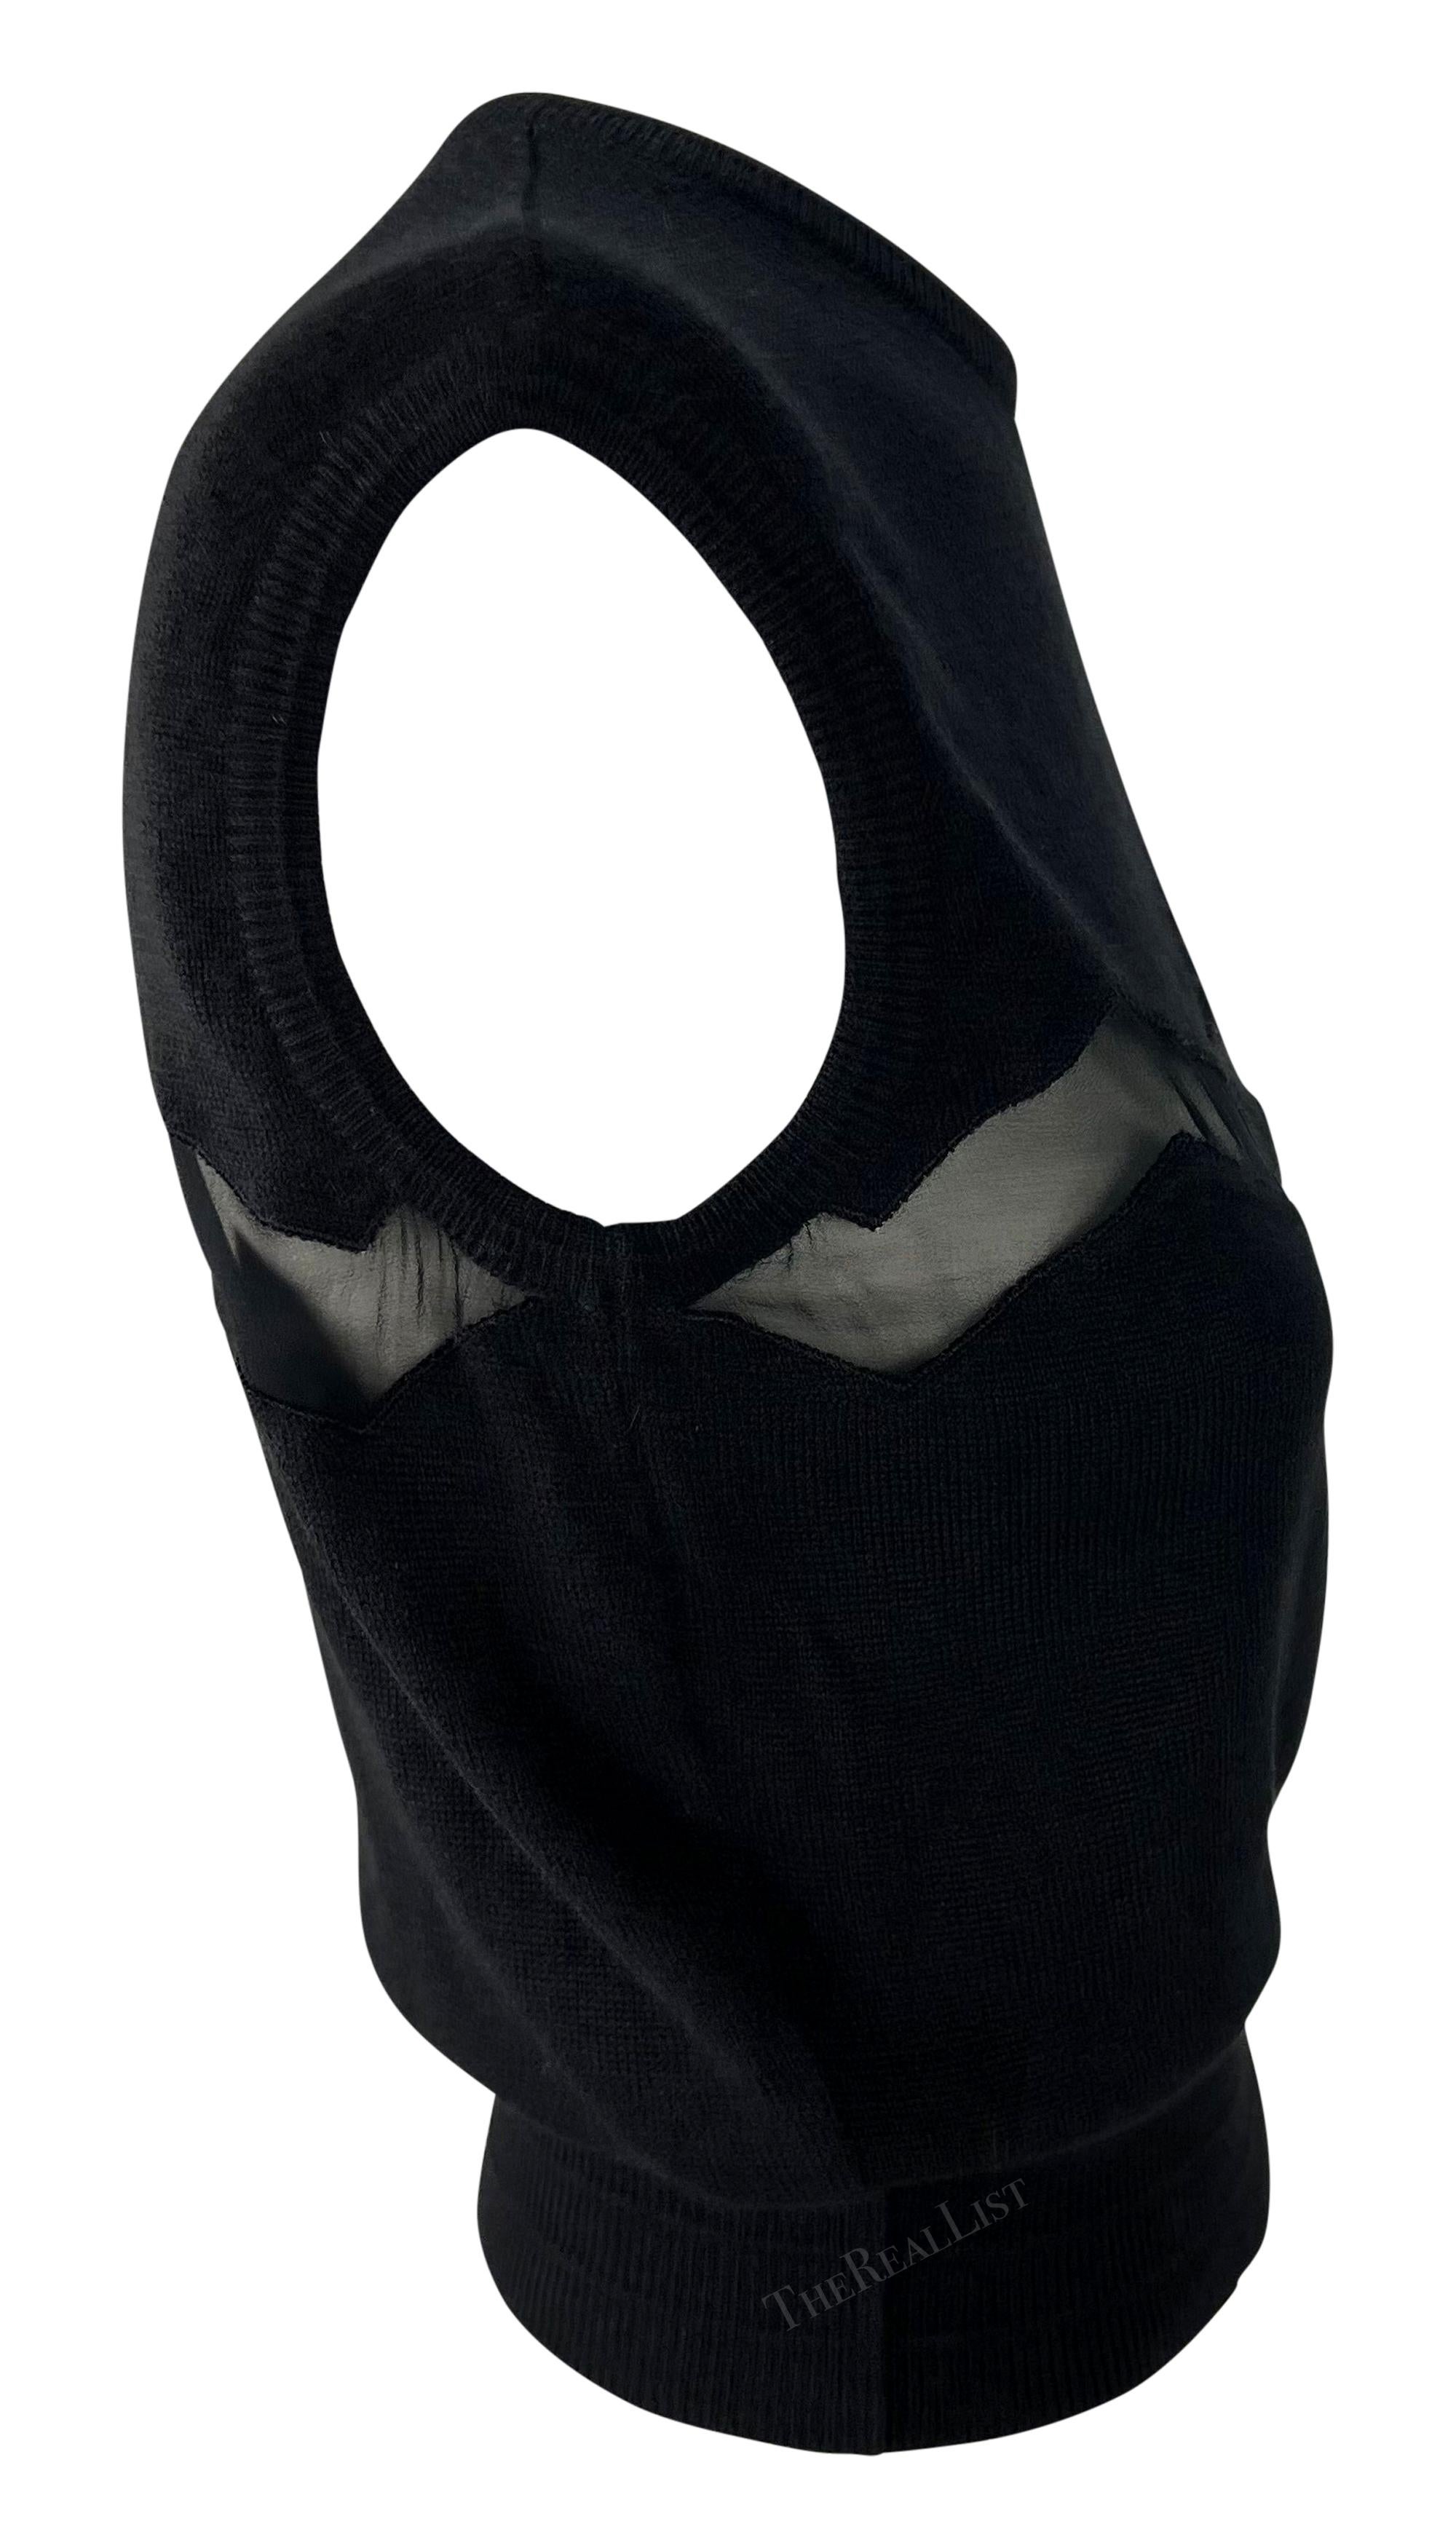 S/S 1994 Gianni Versace Sheer Zig-Zag Panel Black Knit Sweater Vest For Sale 1